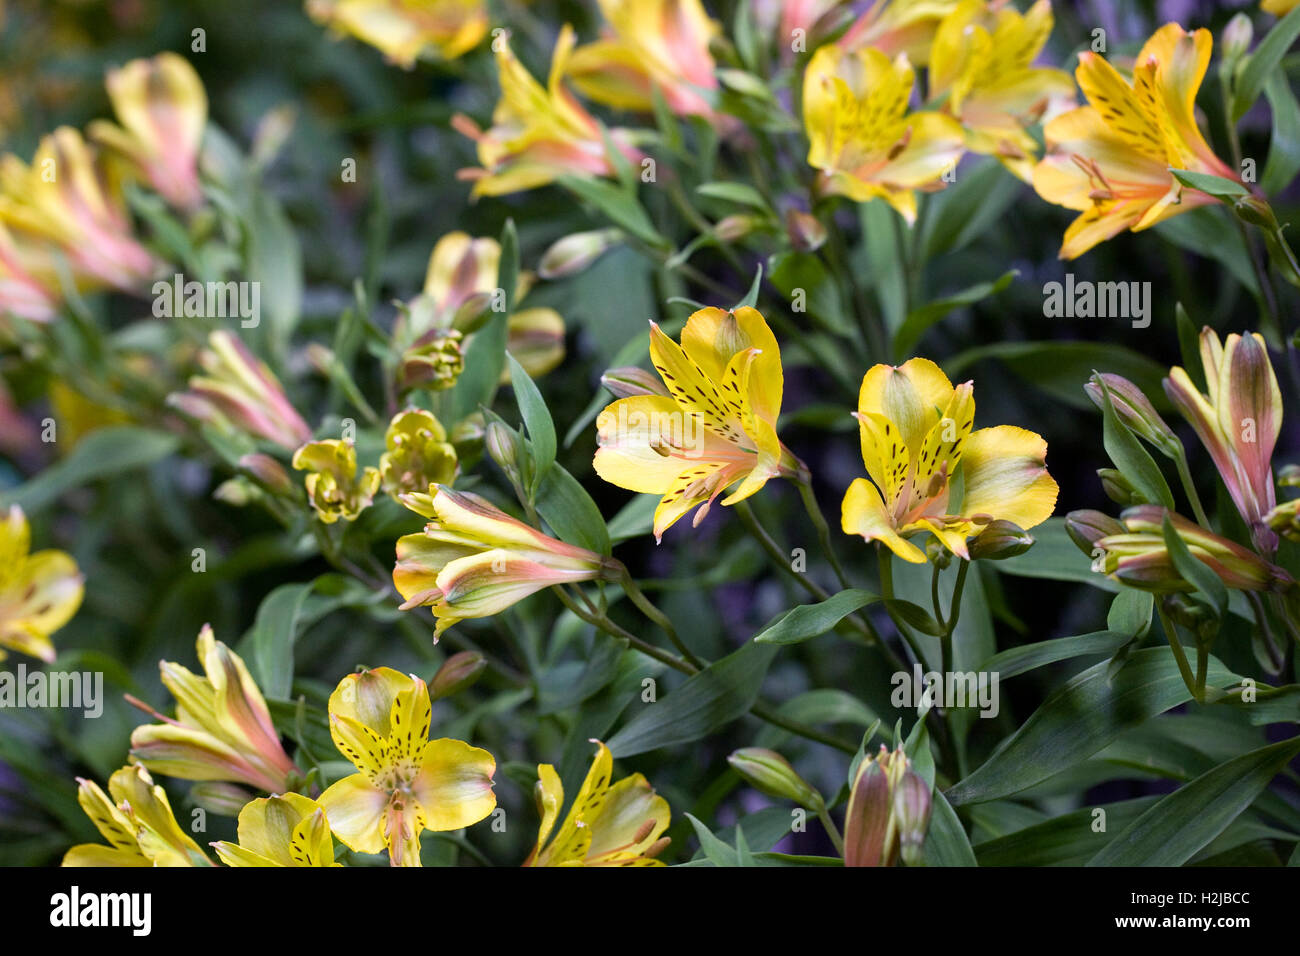 Alstroemeria 'Senna Golden' flowers. Peruvian lily. Stock Photo